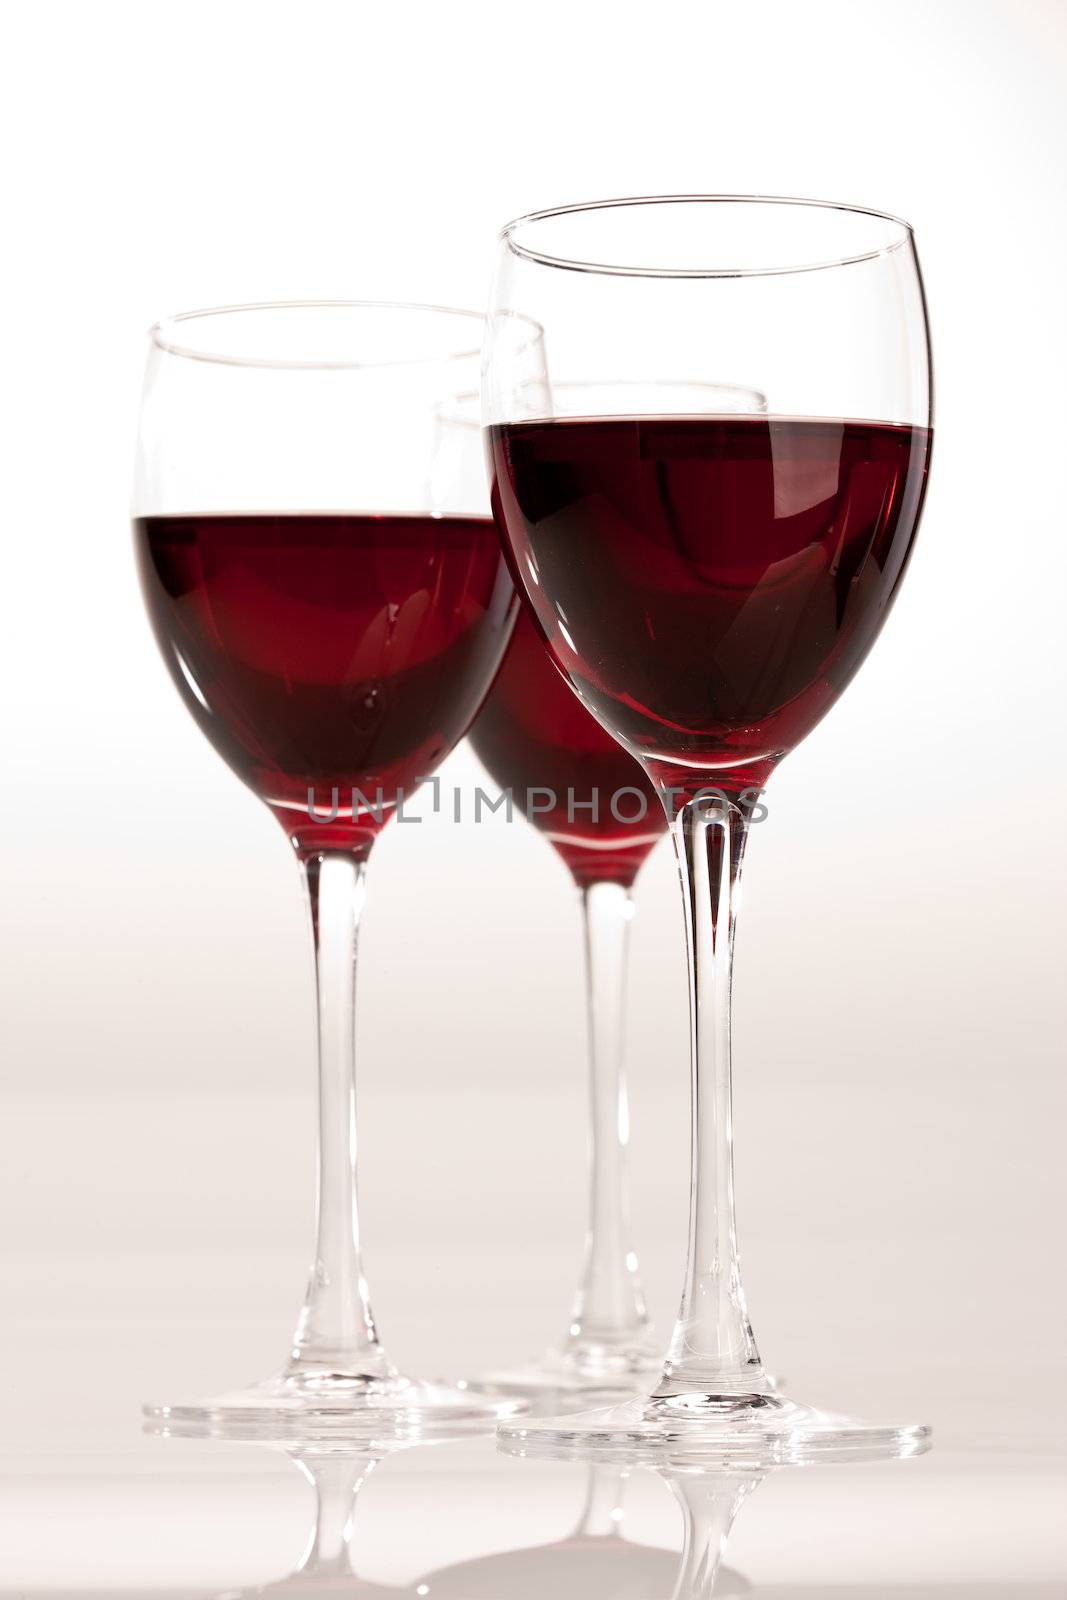 food series: tasty red wine in three bocals